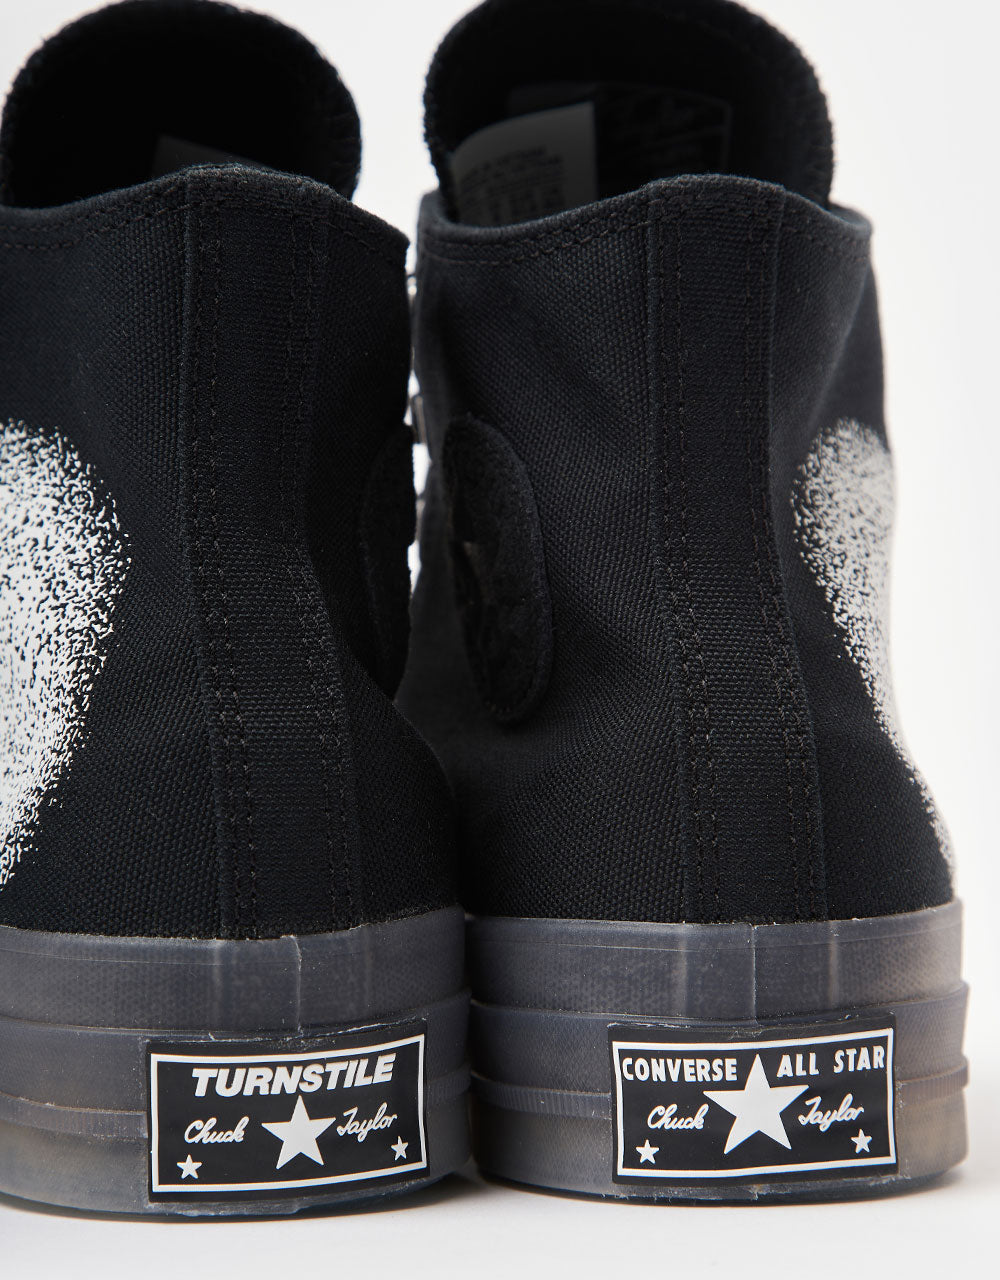 Converse x Turnstile Chuck 70s Skate Shoes - Black/Grey/White